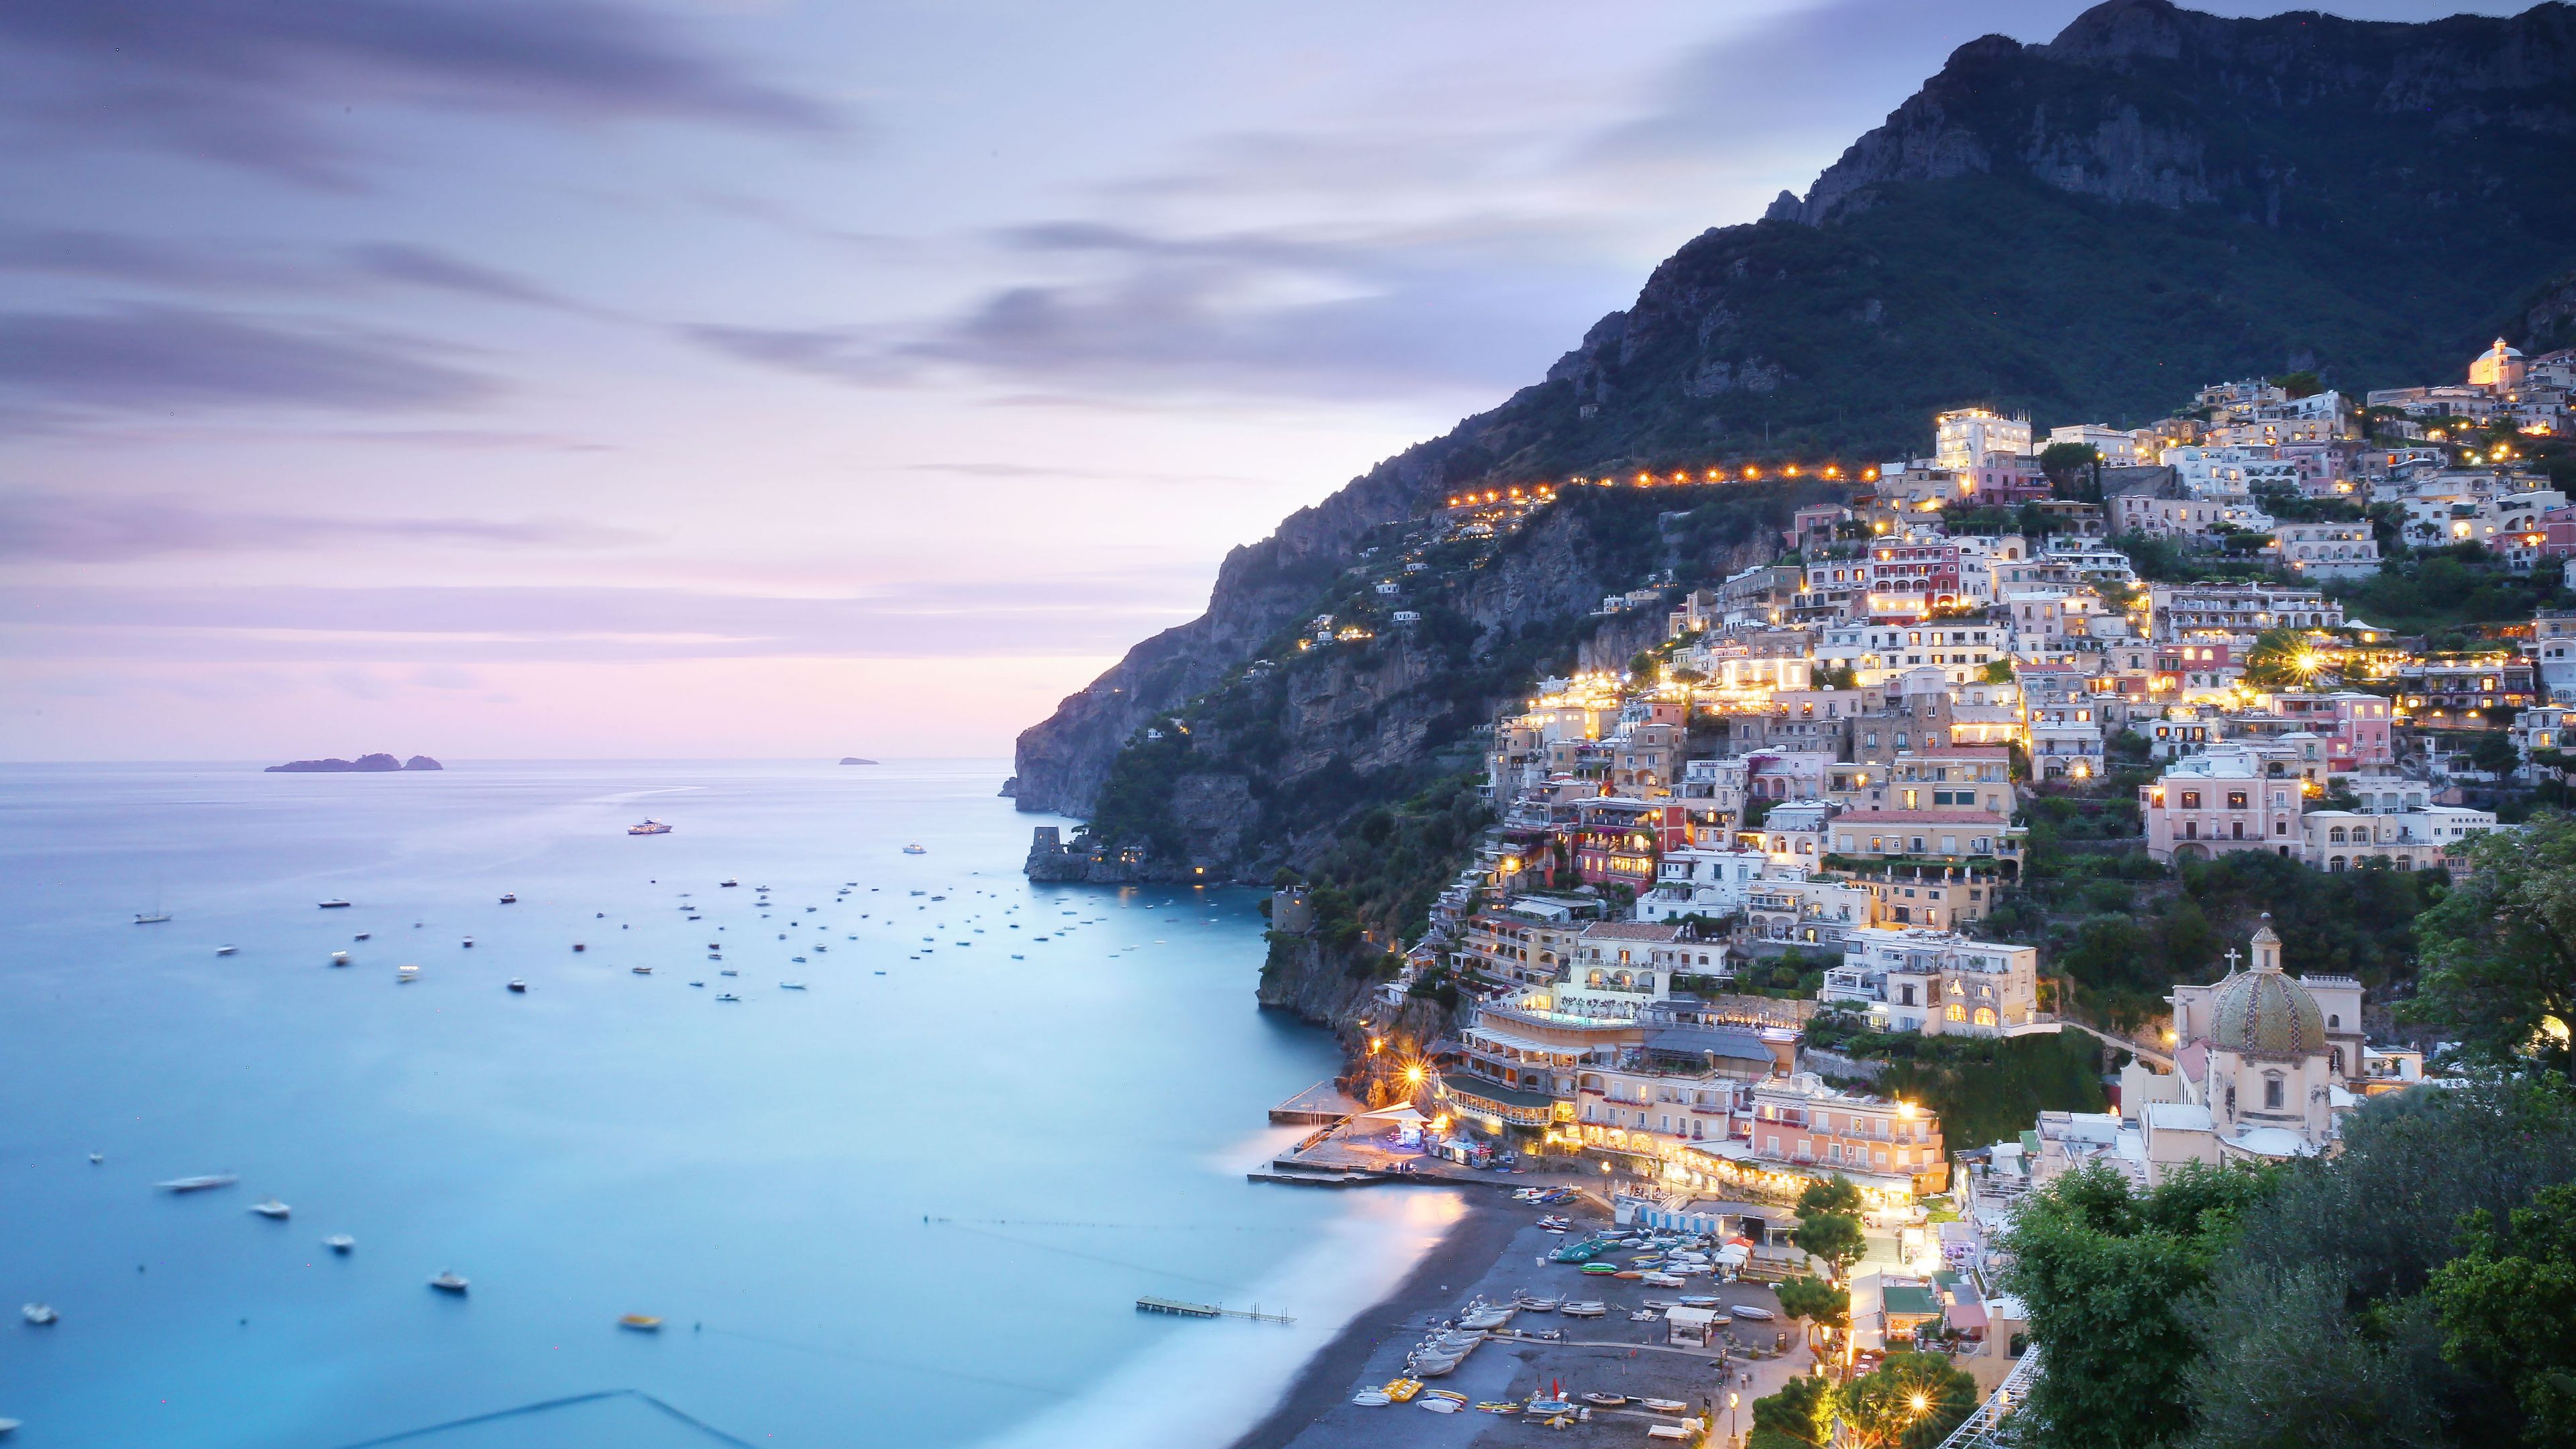 Download Coastal city, Positano, Italy wallpaper, 3840x 4K UHD 16: Widescreen